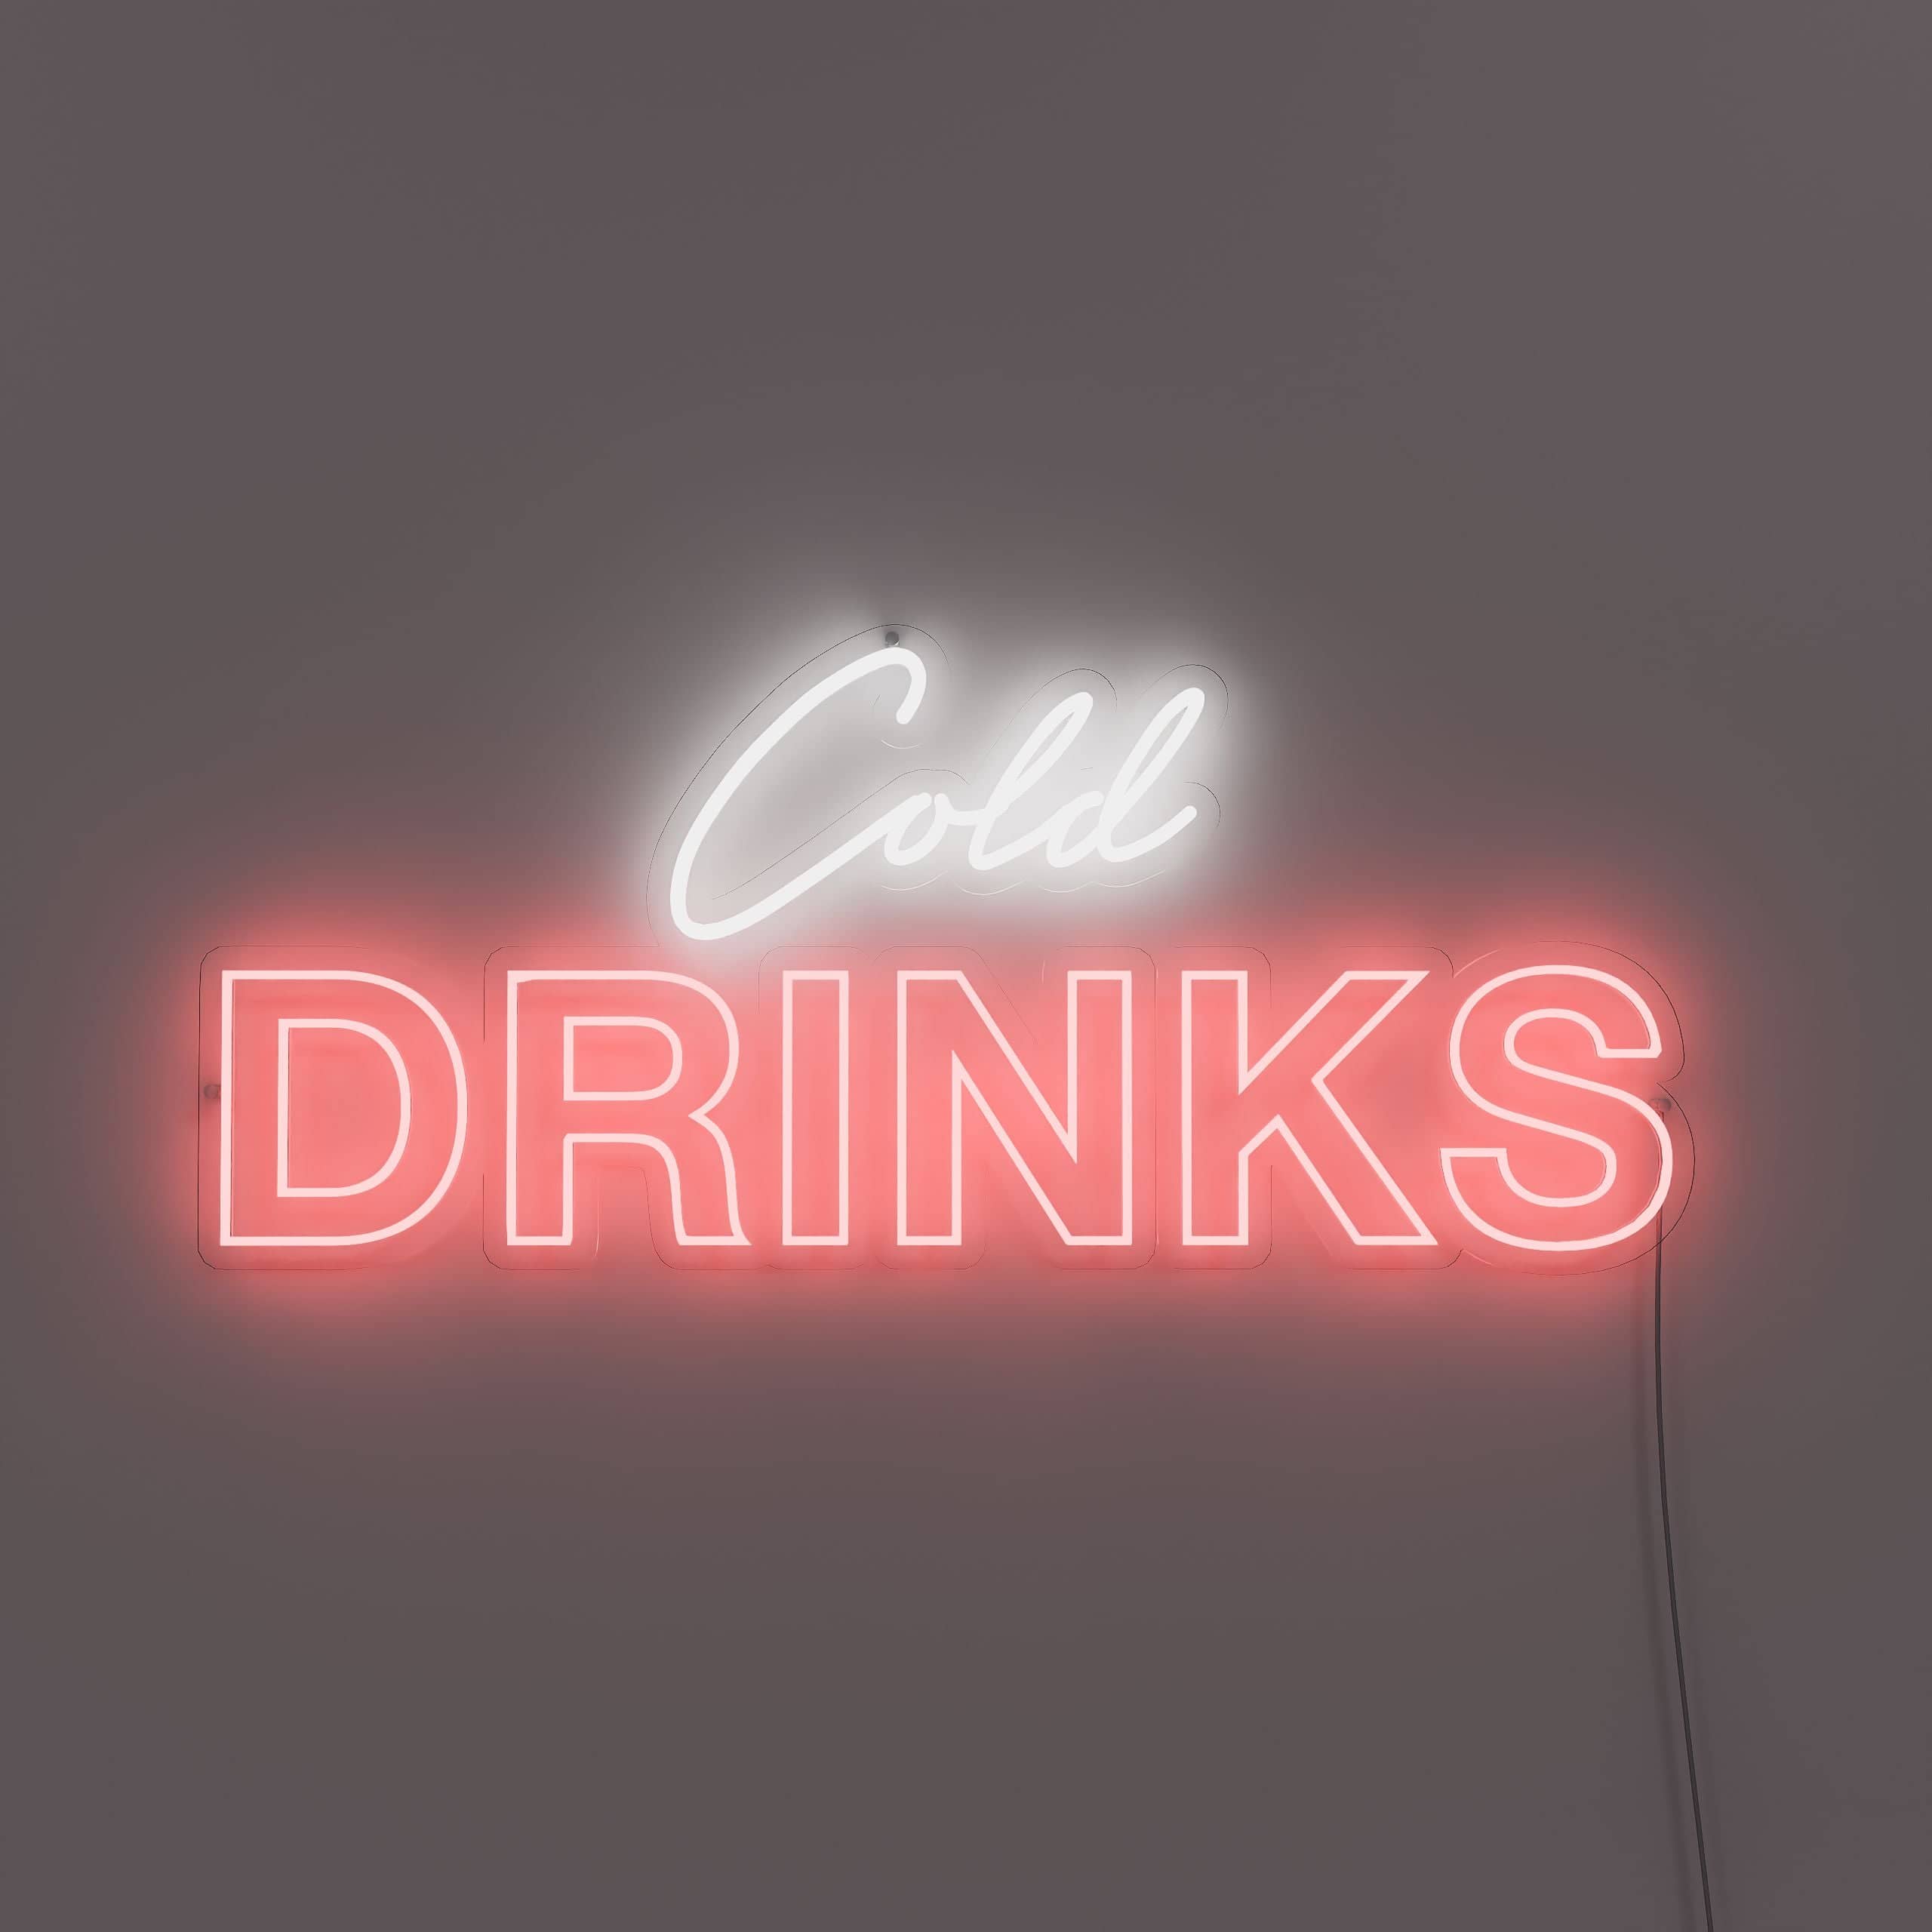 chilled-beverages-neon-sign-lite